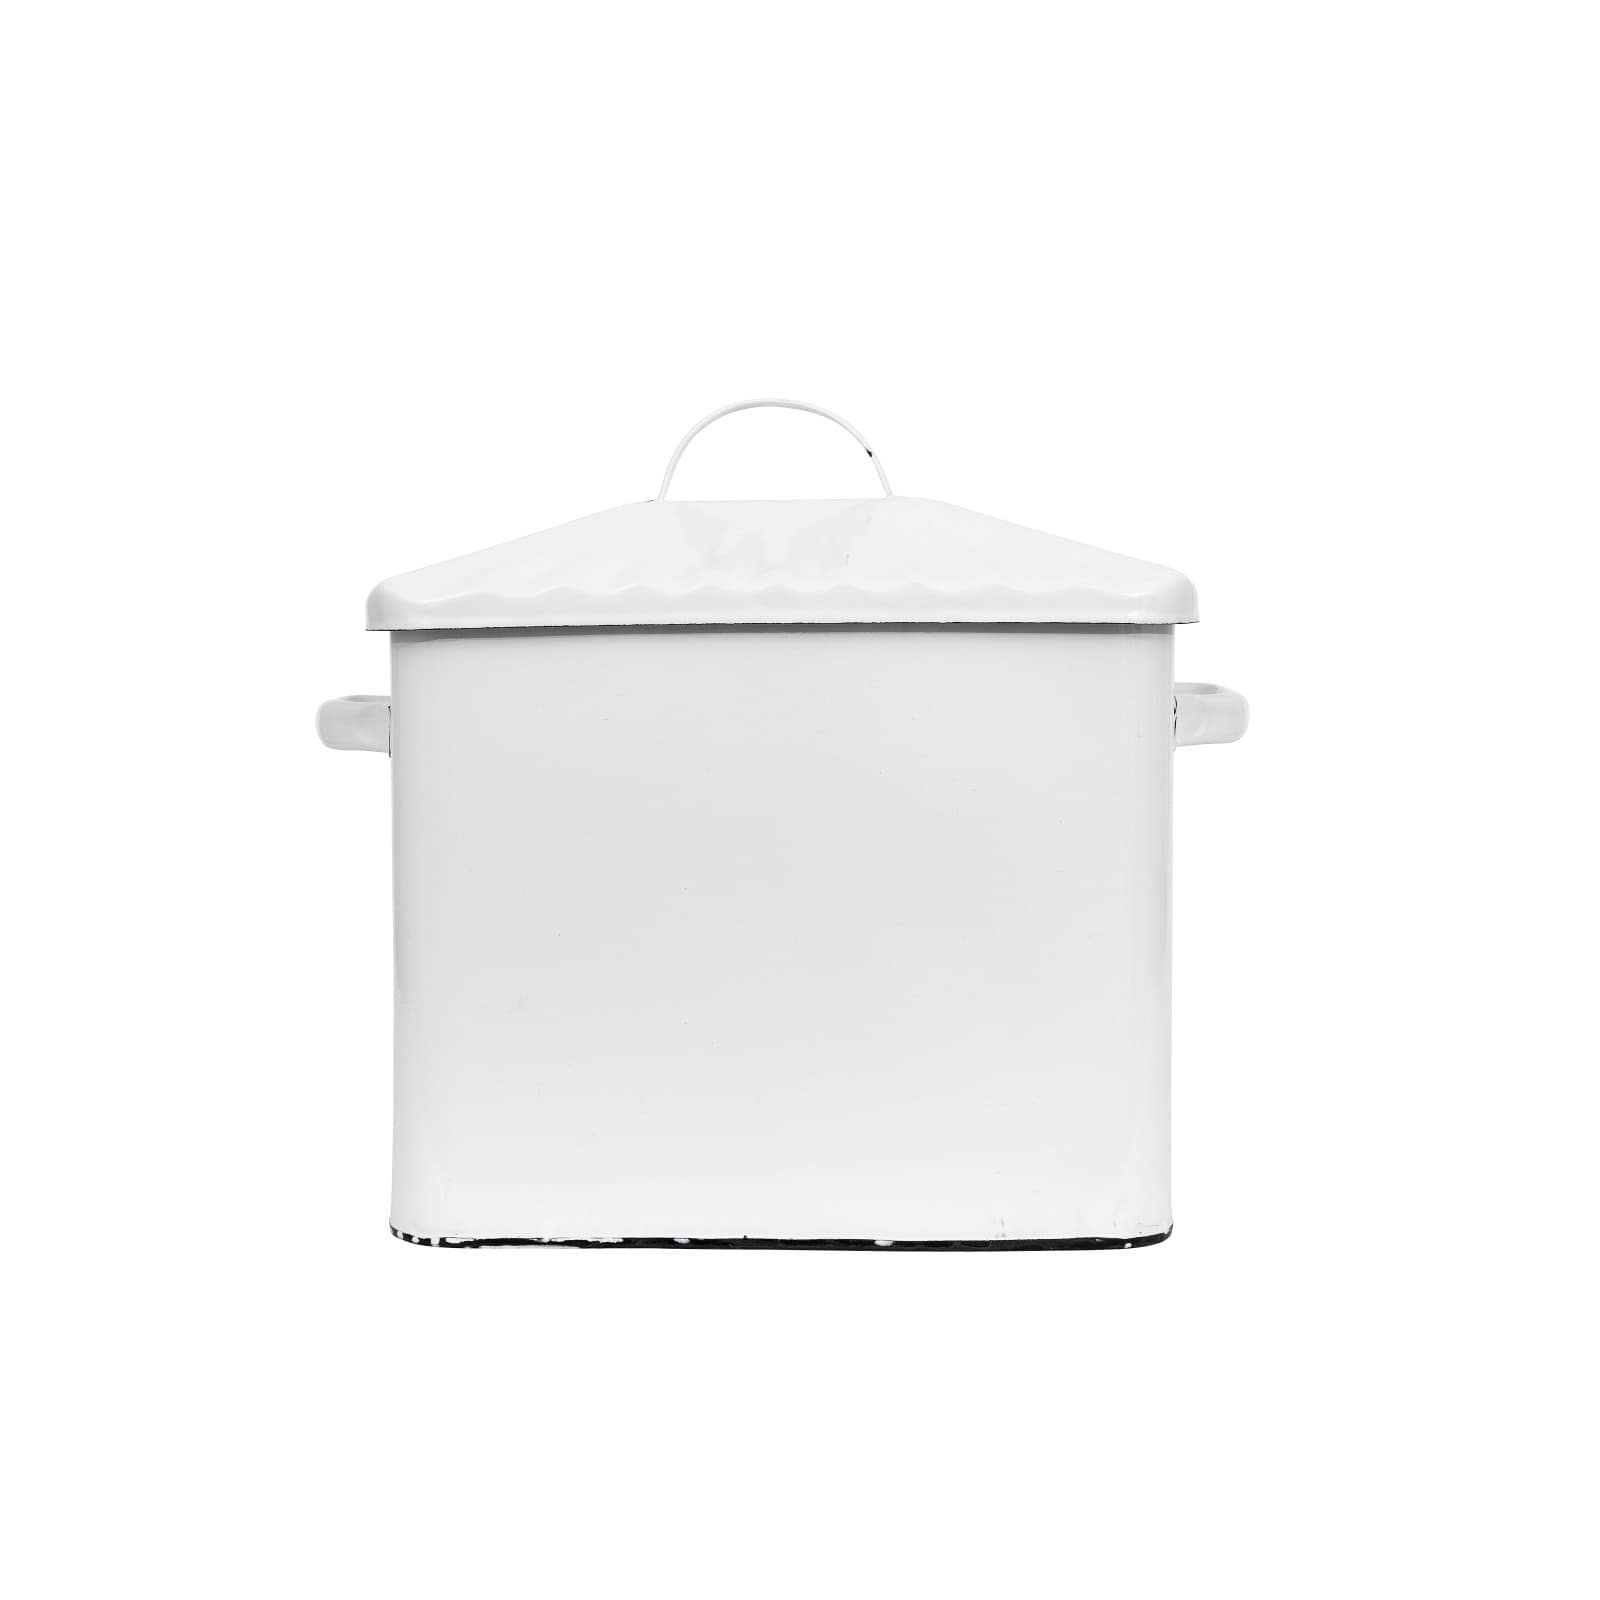 Off-White Creative Co-Op Oval Metal Lid Bread Box